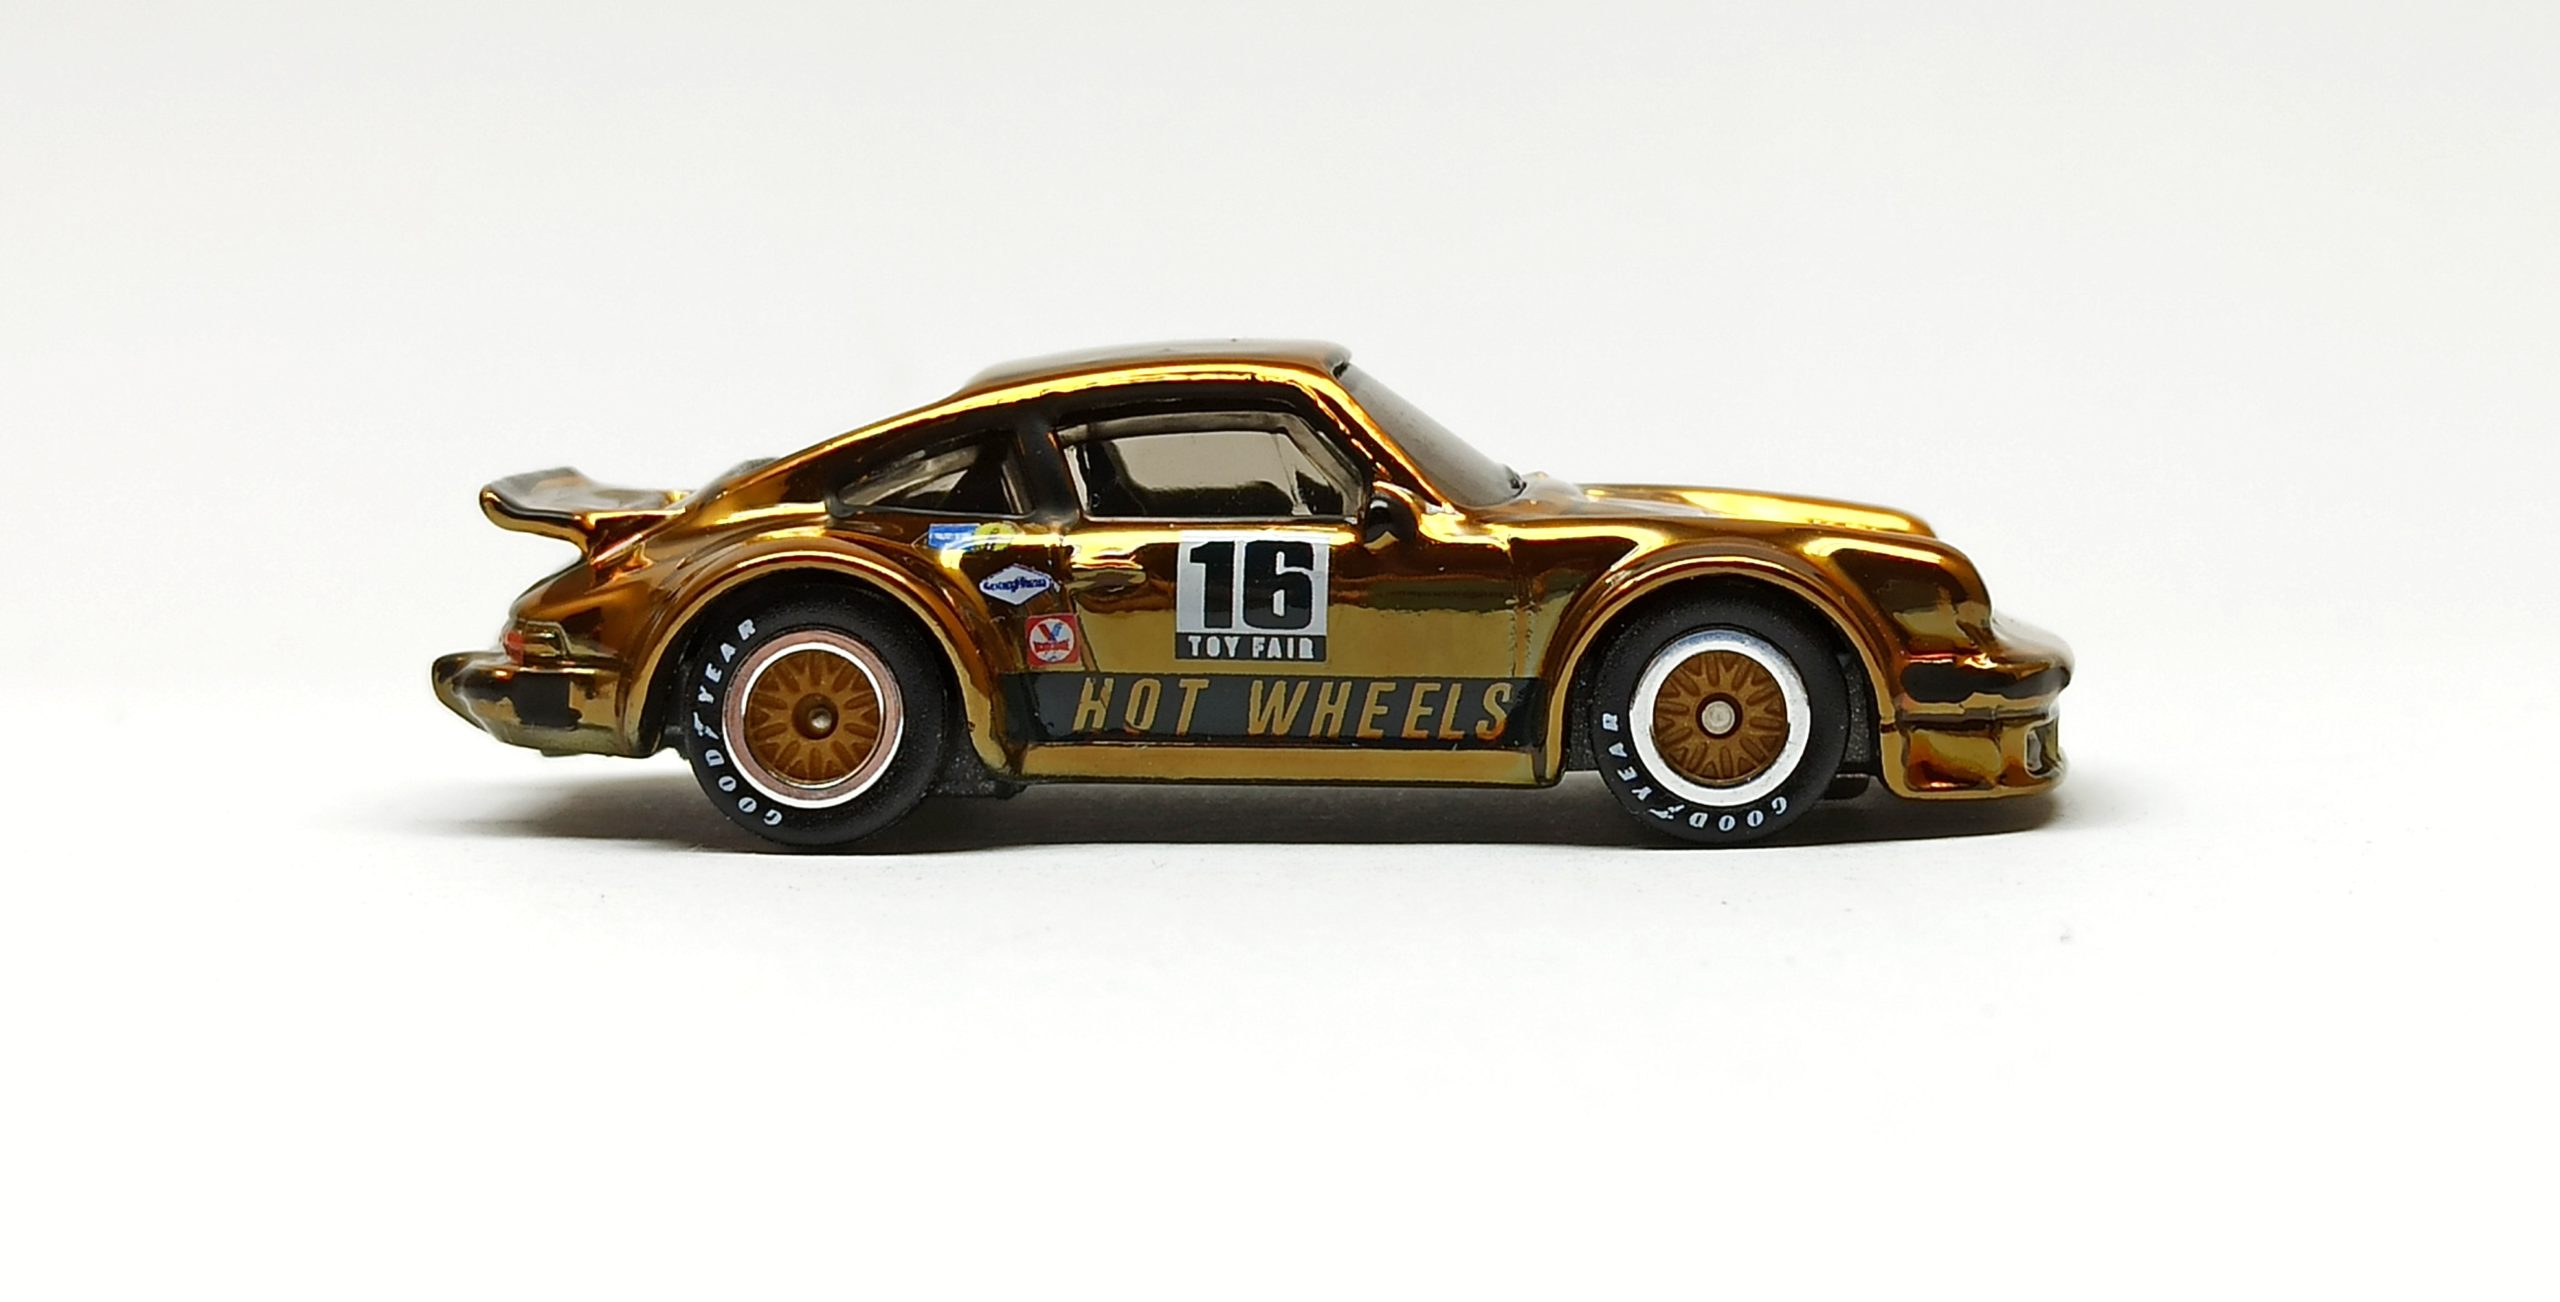 Hot Wheels Porsche 934 Turbo RSR (DJH70) 2016 Toy Fair chrome gold custom